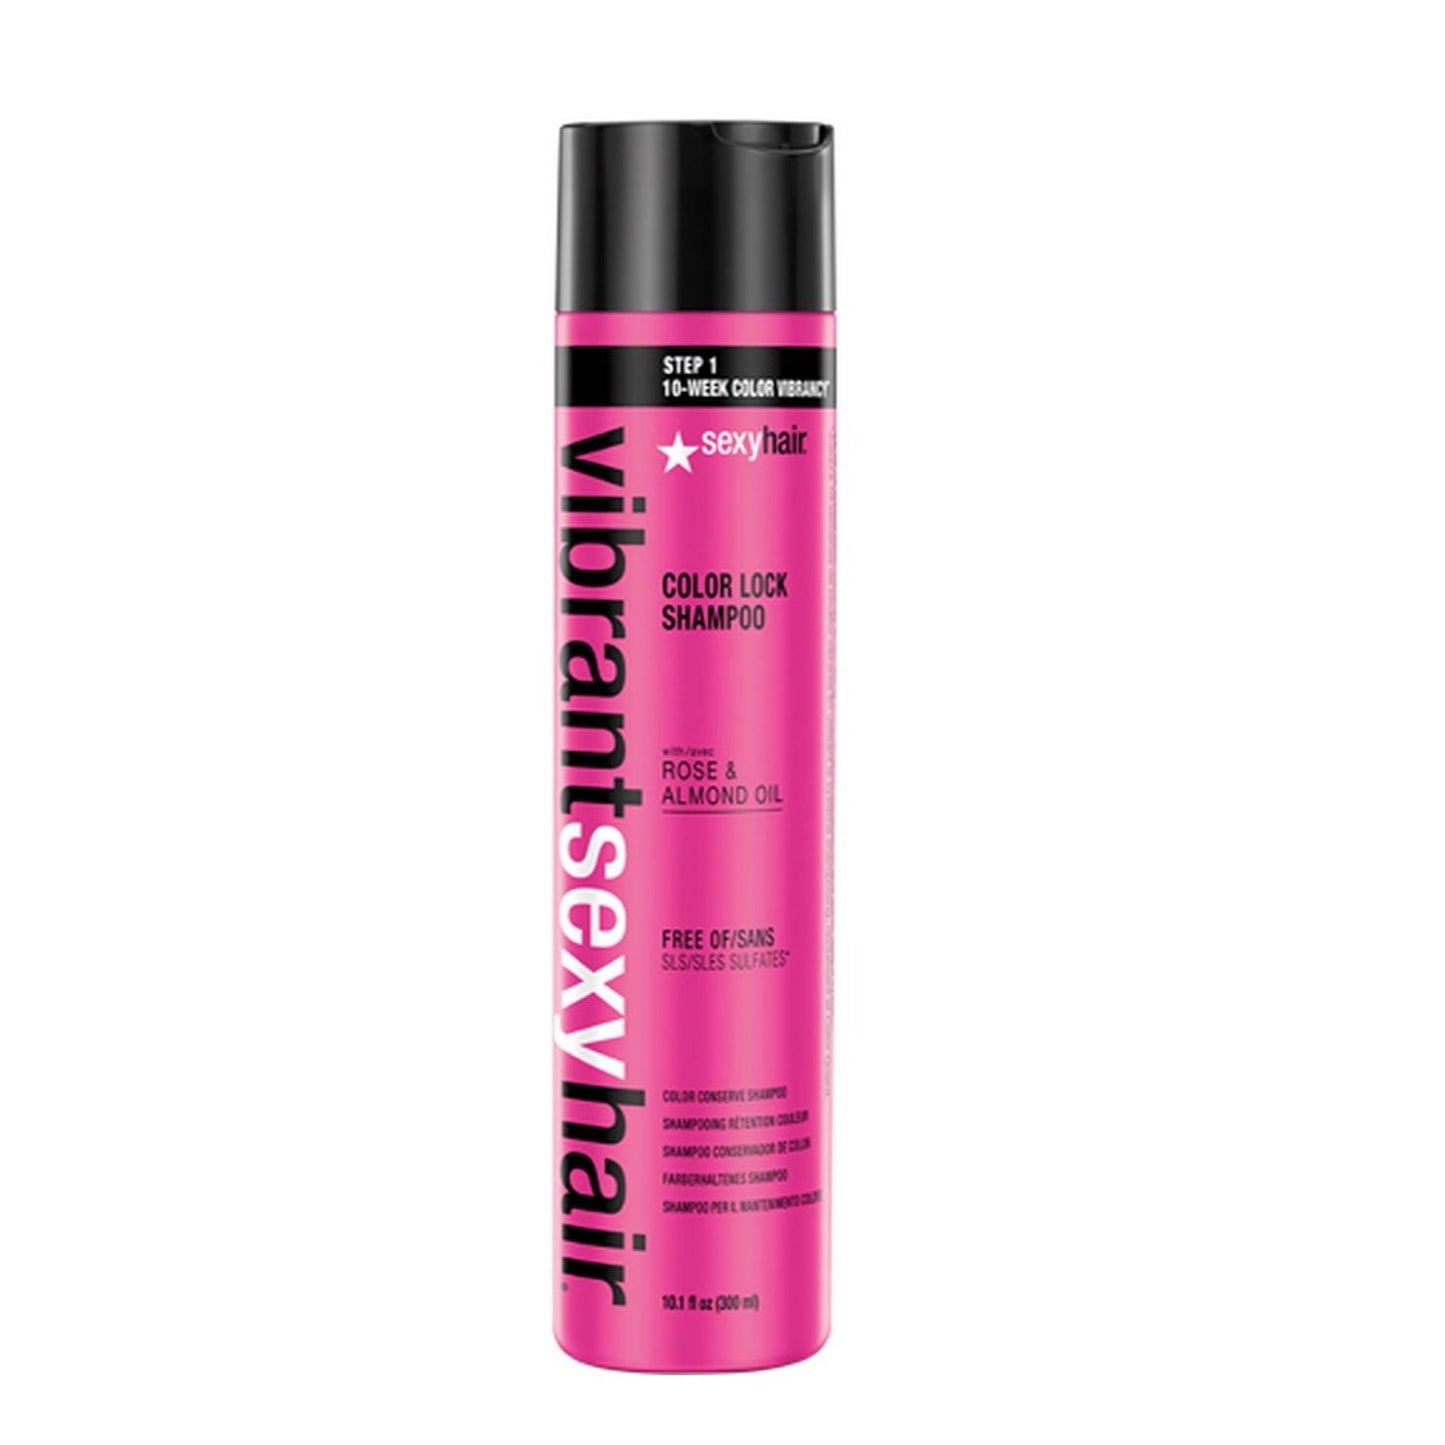 Vibrant Sexy Hair Sulfate-Free Color Lock Shampoo